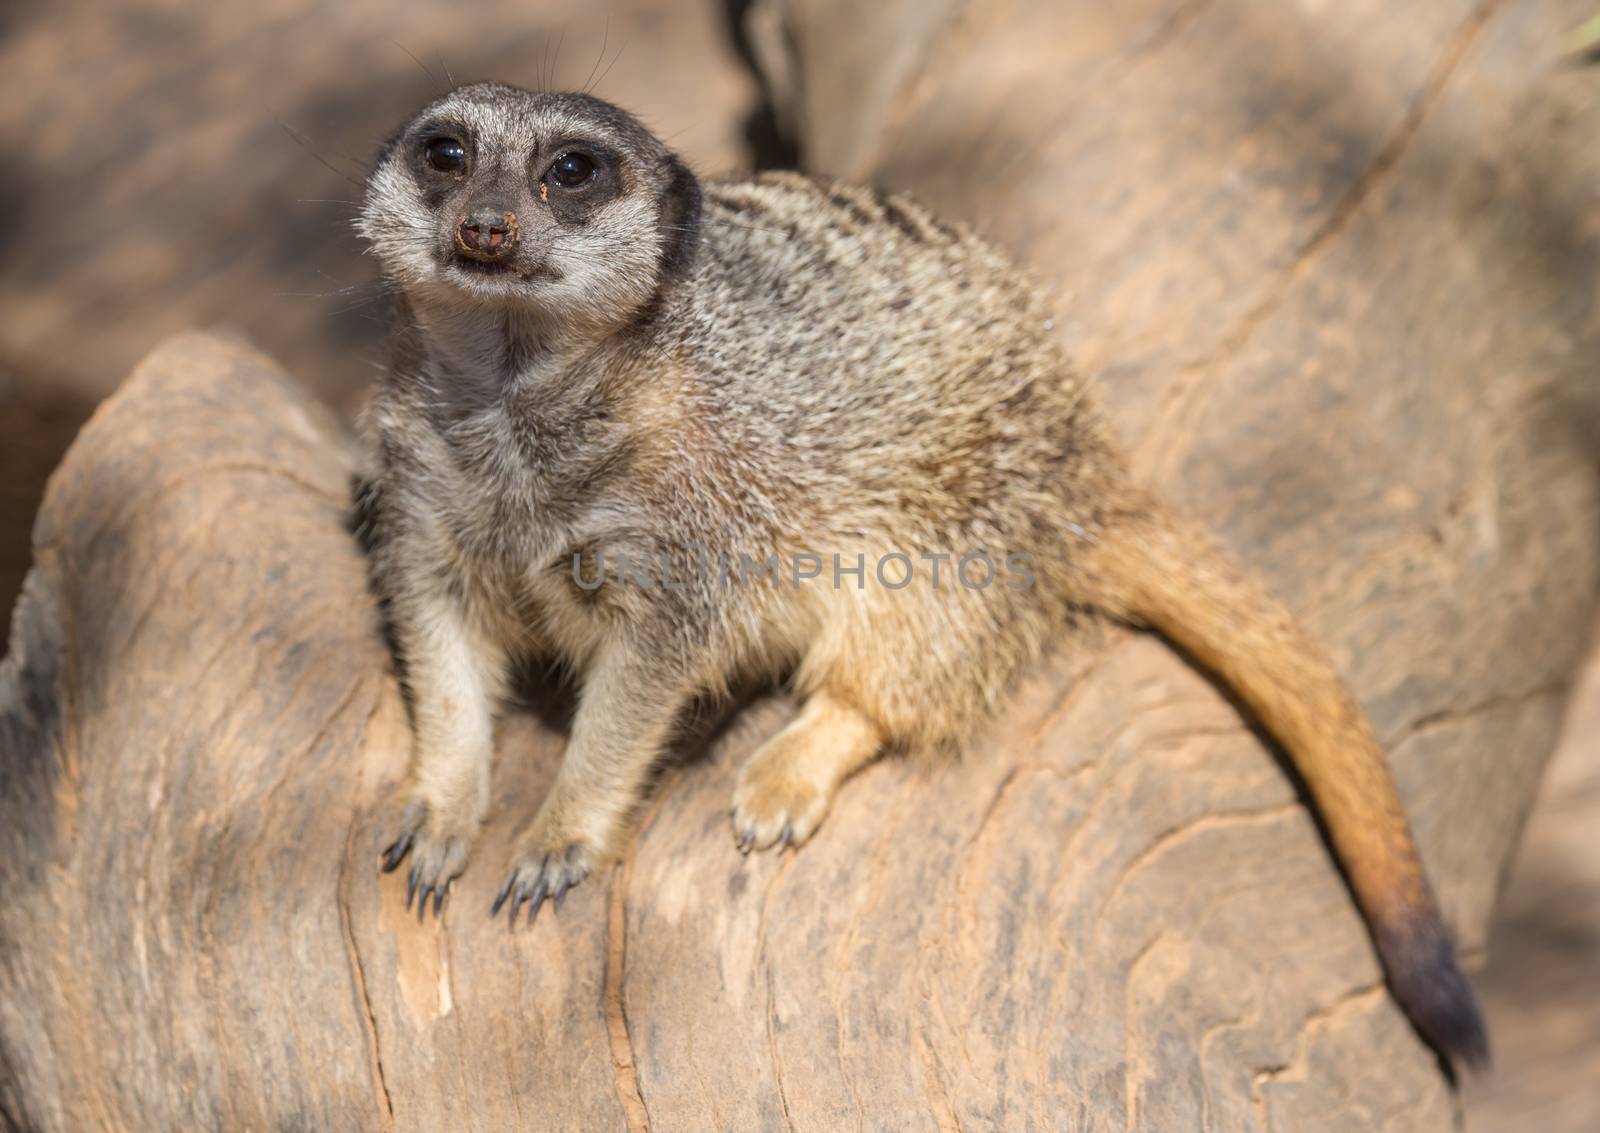 Cute meerkat or suricate sunning itself on a tree stump